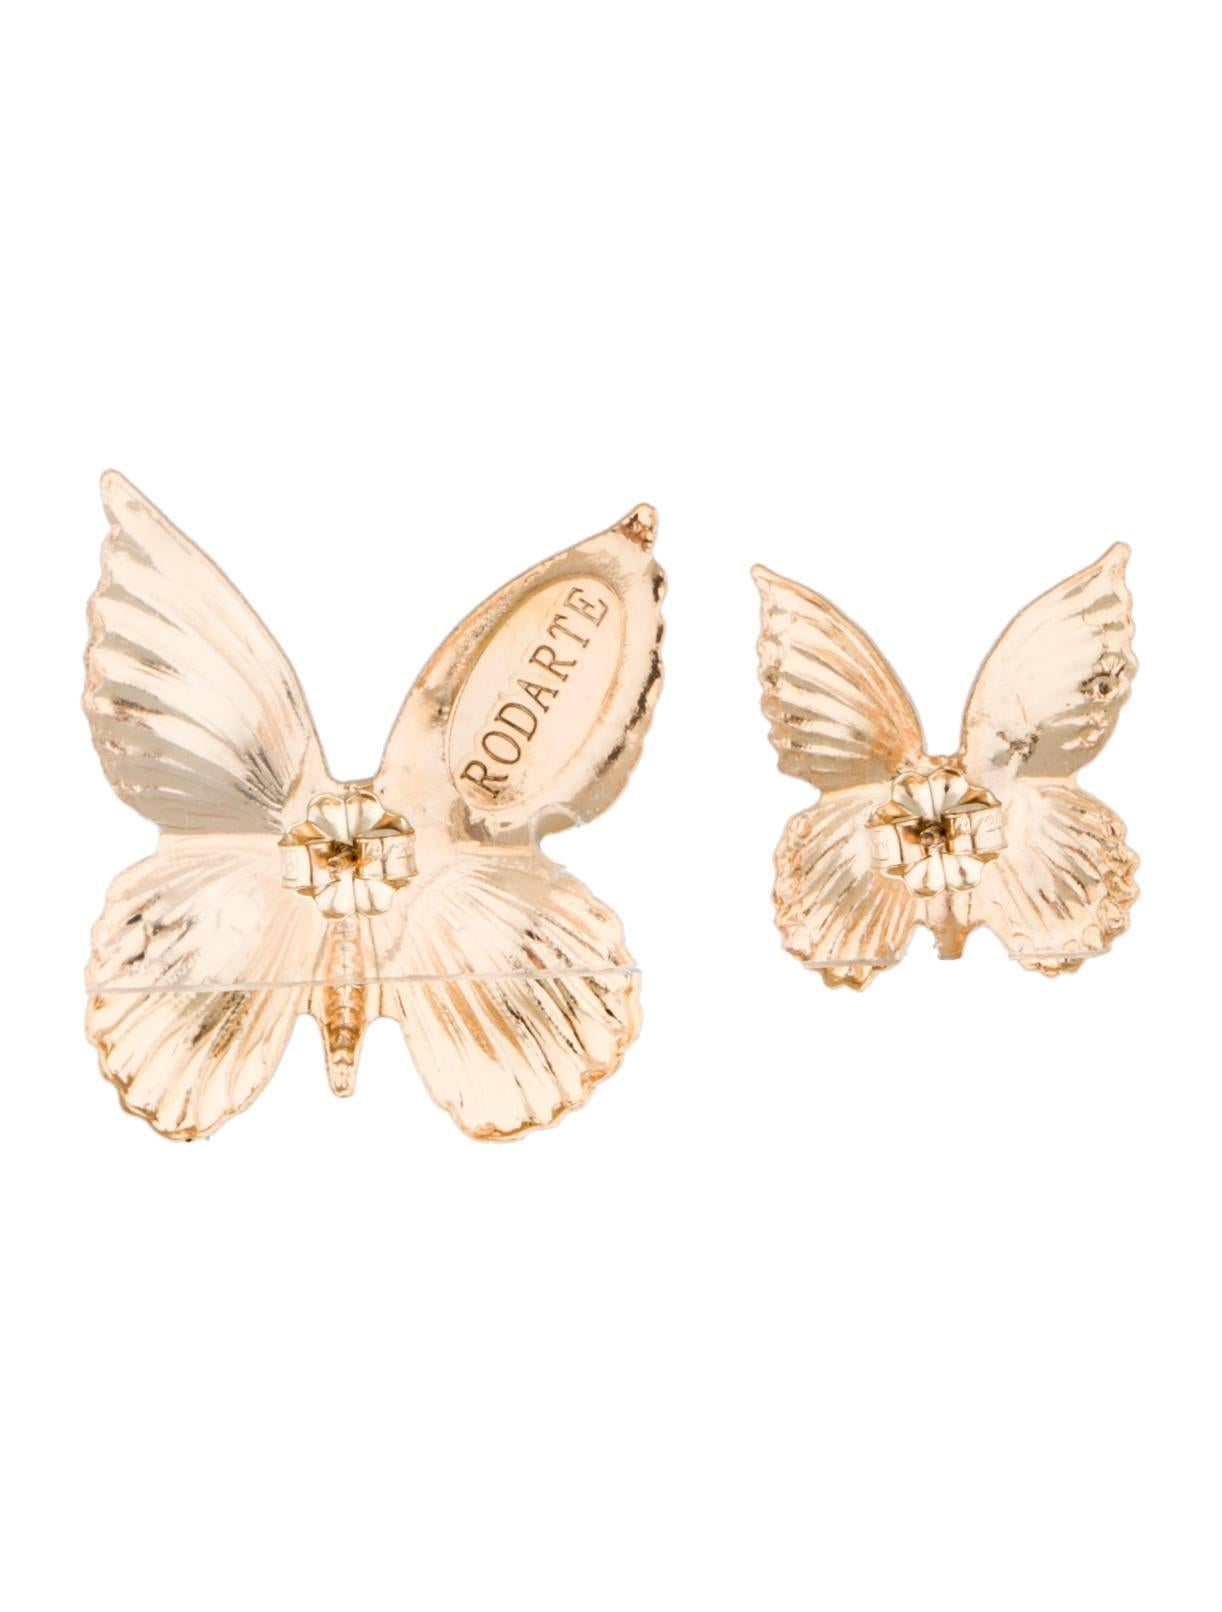 Rodarte gold tone butterfly pierced earrings. 

Asymmetrical size give these earrings the whimsical Rodarte touch.

Large earring approximately 1